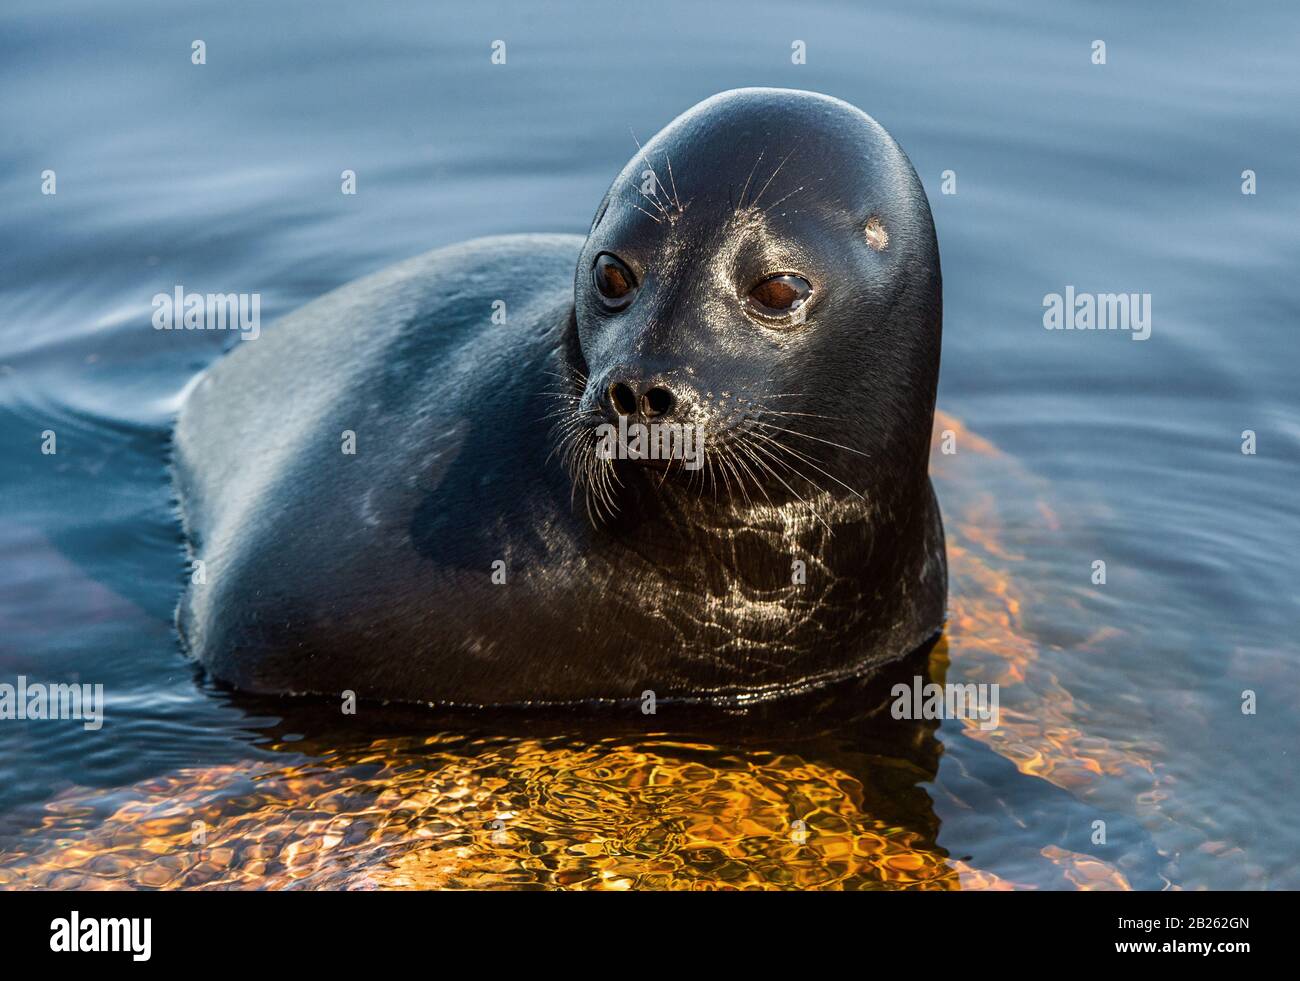 The Ladoga ringed seal resting on a stone. Close up portrait. Scientific name: Pusa hispida ladogensis. The Ladoga seal in a natural habitat. Ladoga L Stock Photo